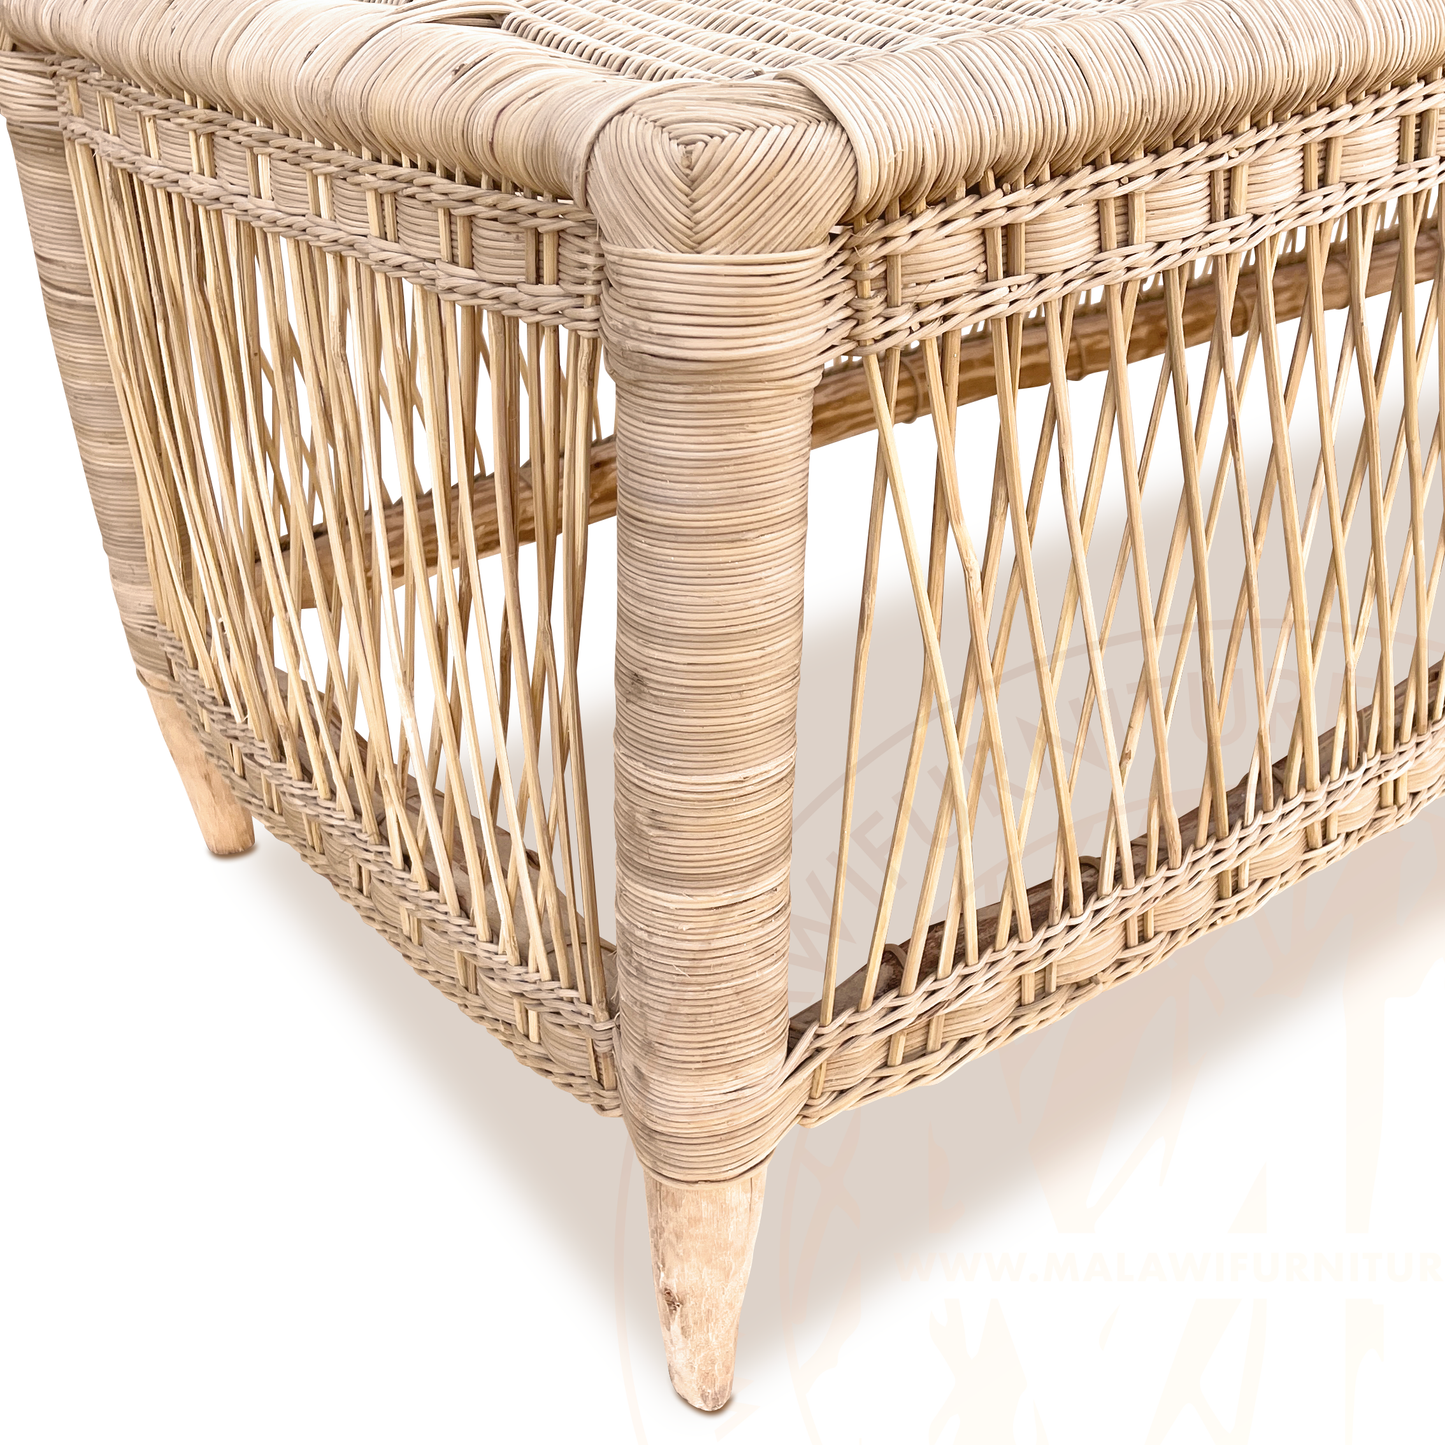 Classic Fancy Rectangular Bench Malawi Furniture hand weaved natural hand made rattan stool